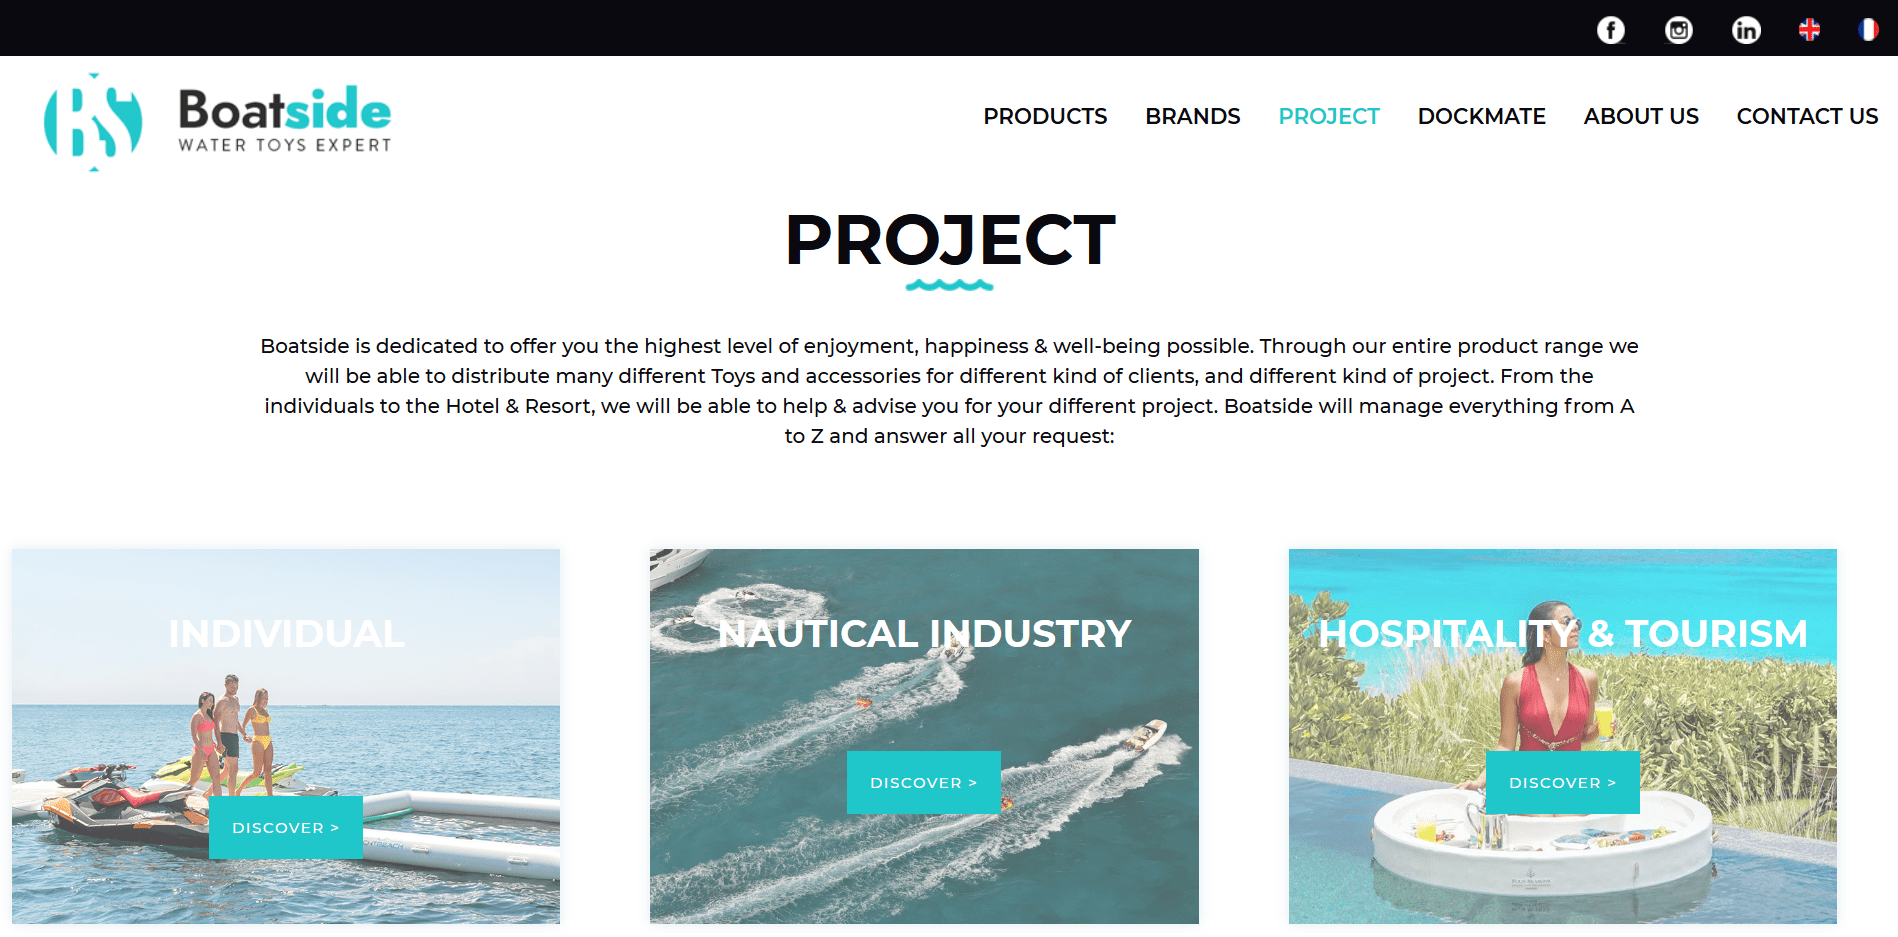 Logiciel Bateau - Boatside - Website